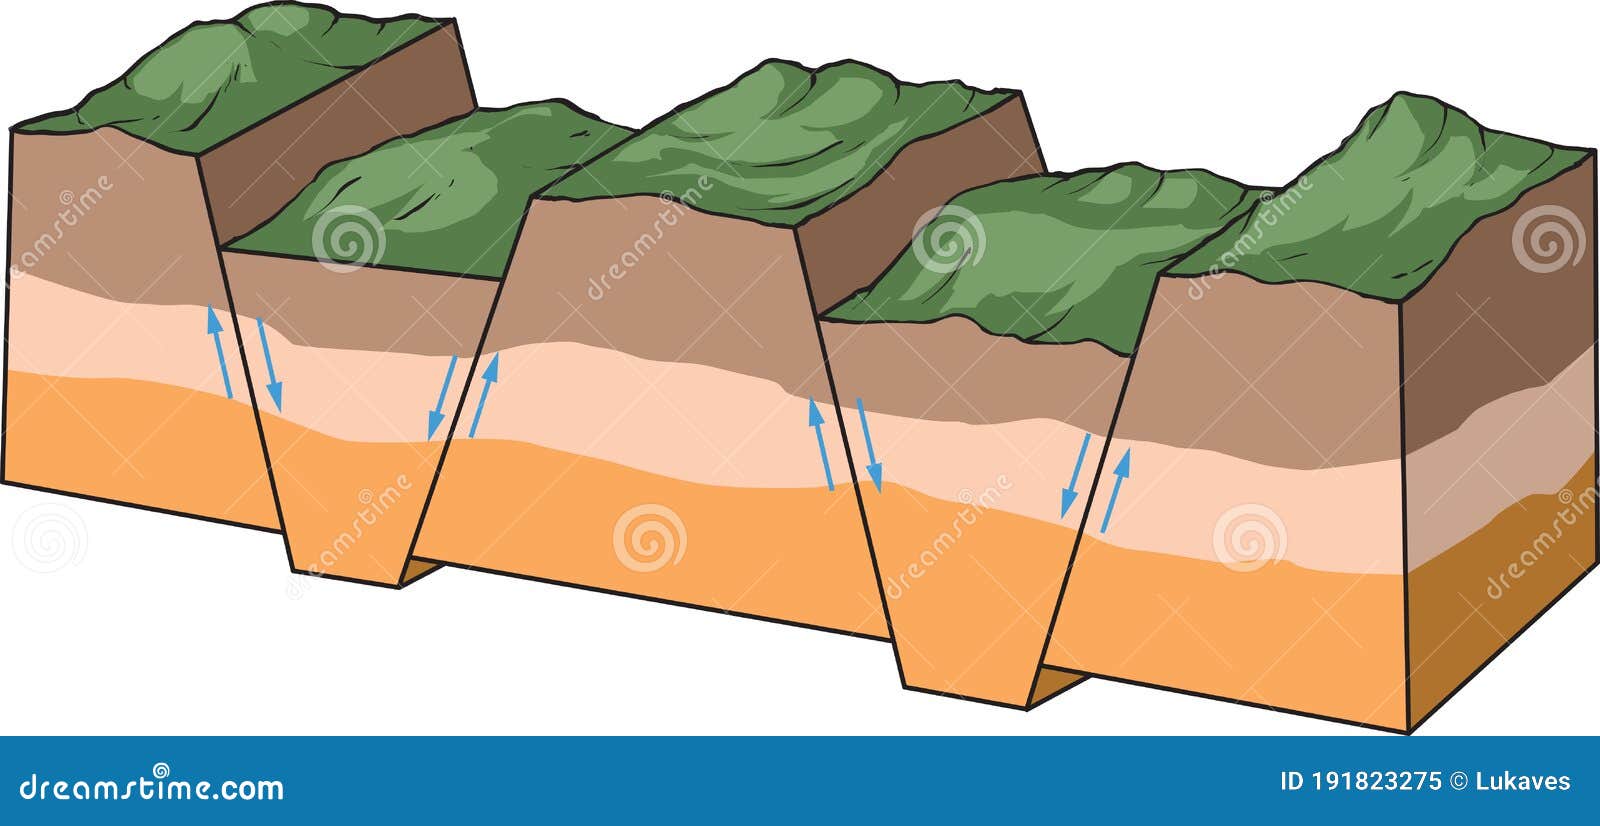 fault-block mountains